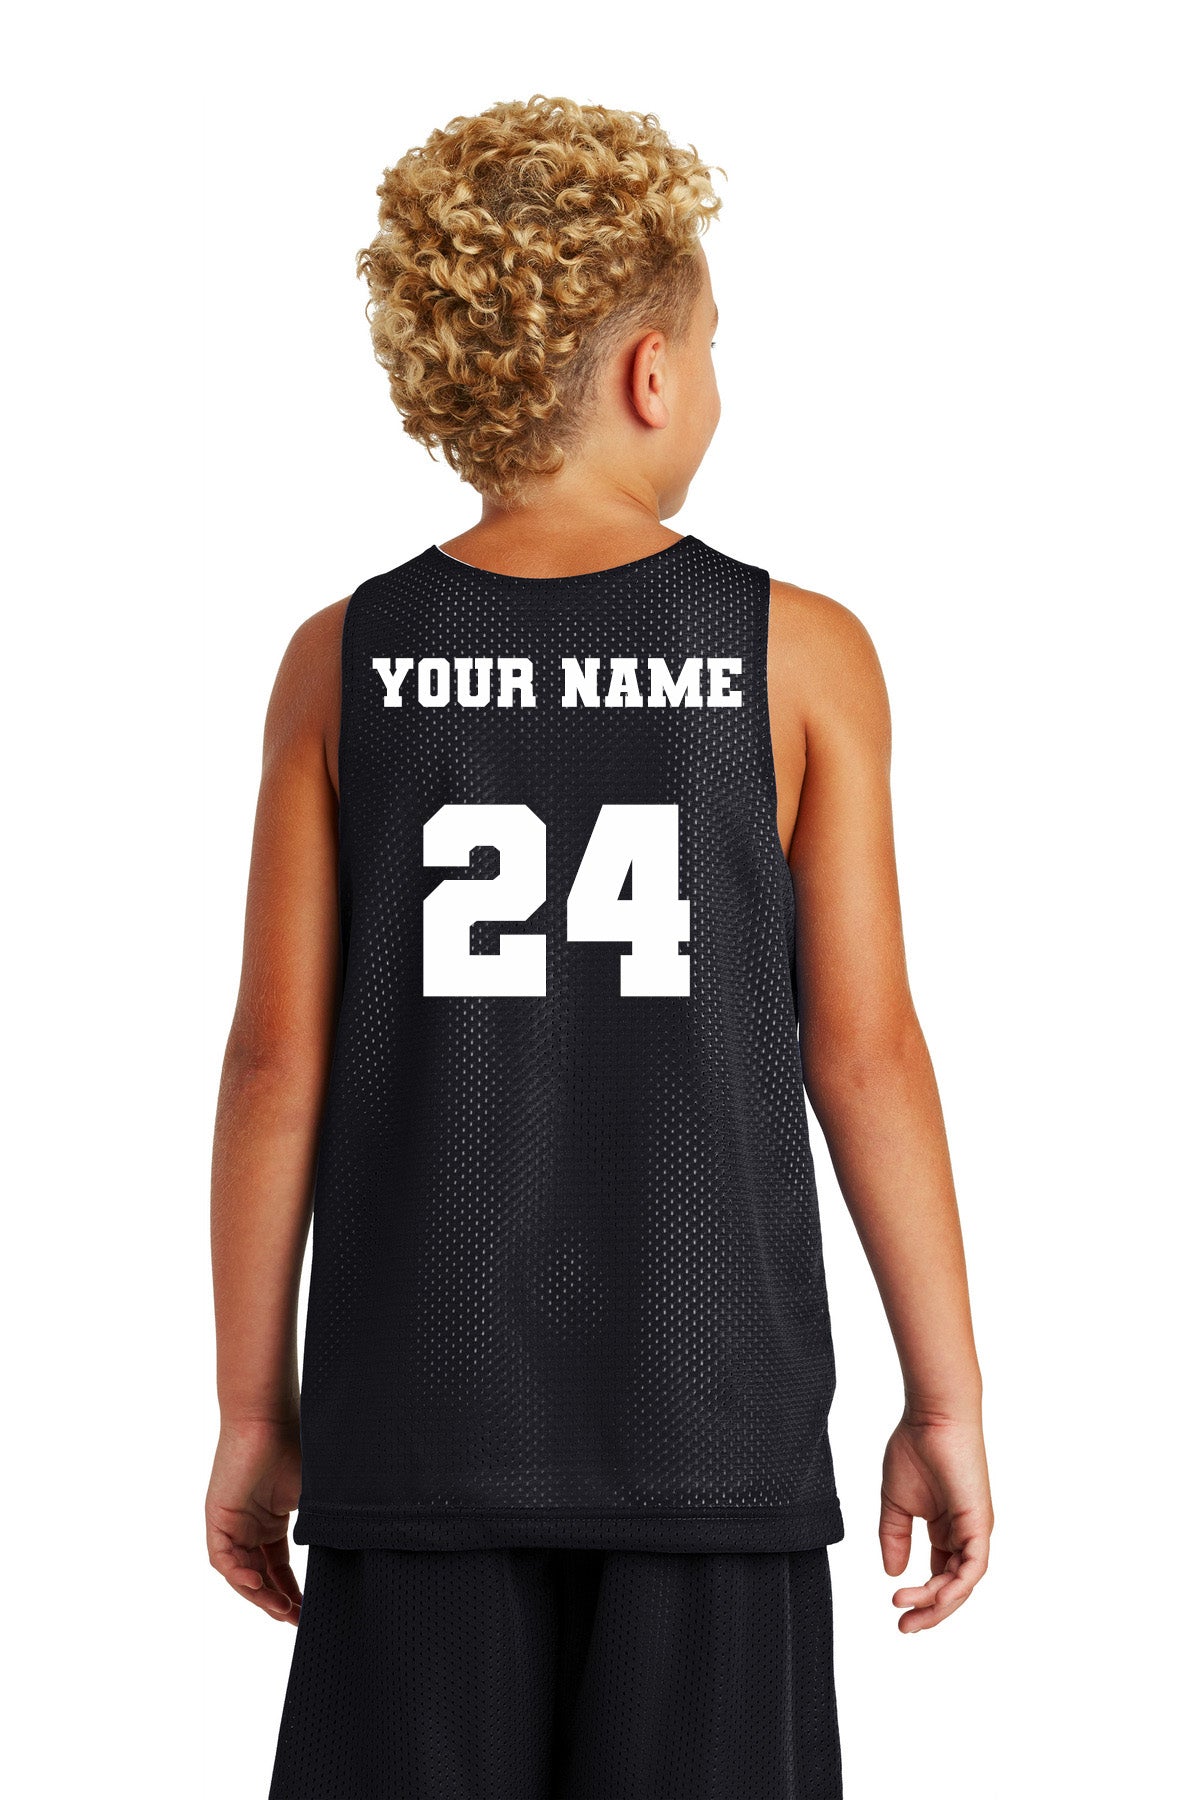 youth size basketball jersey